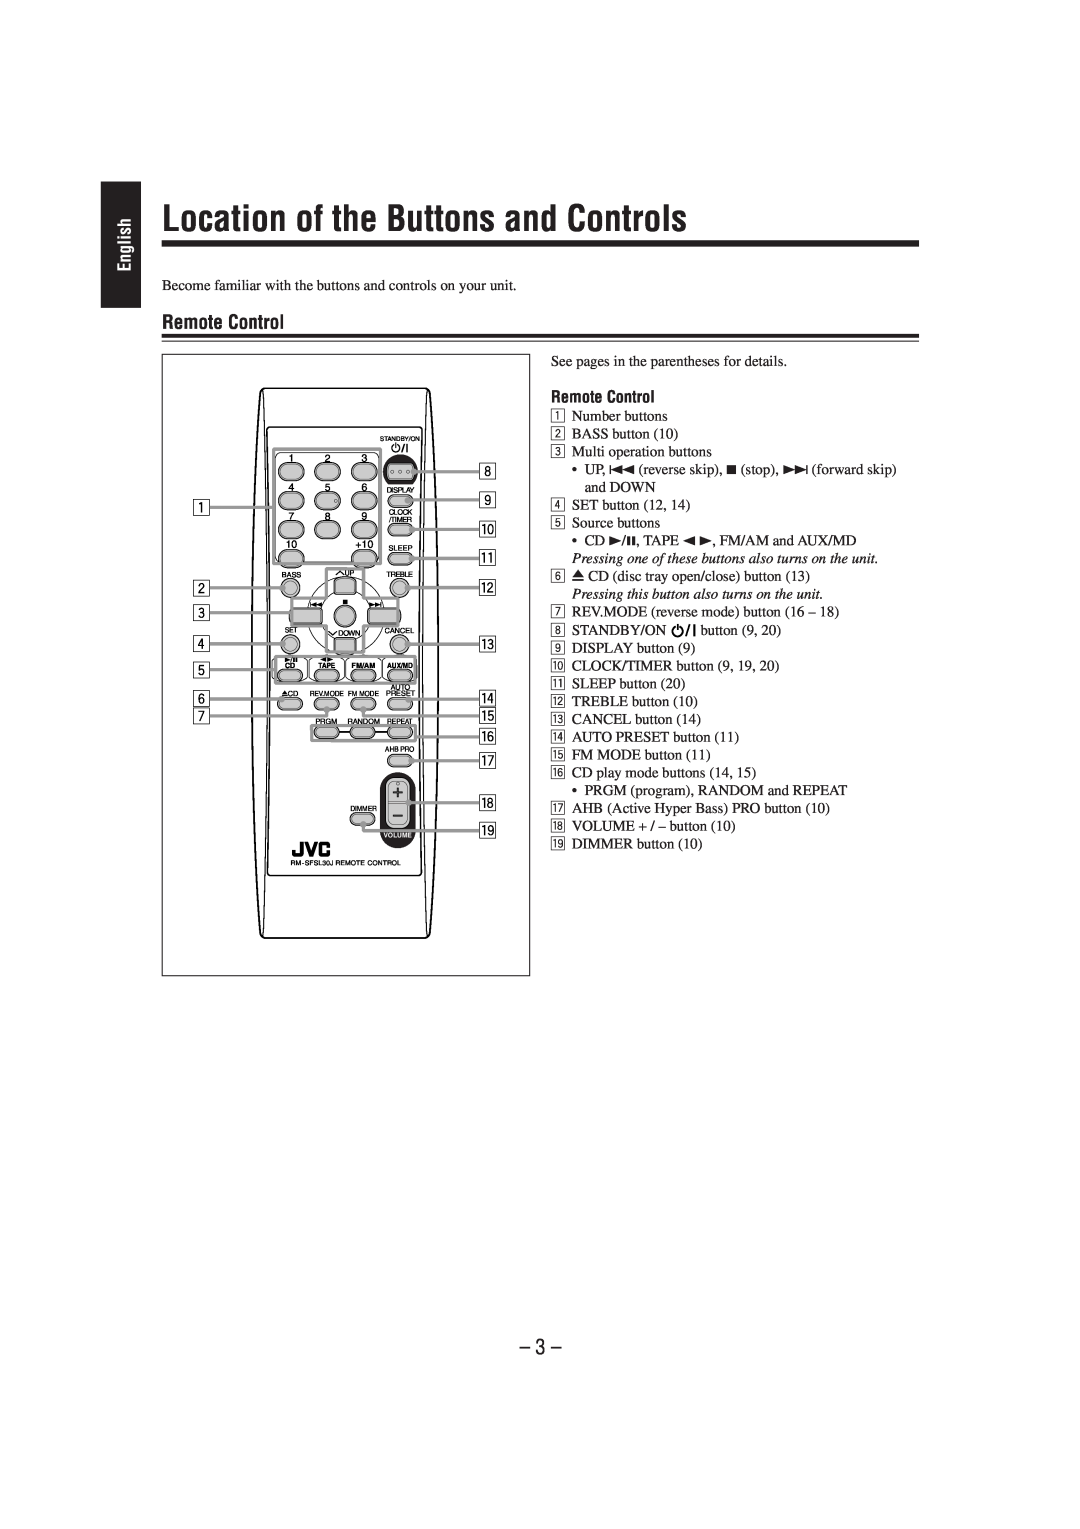 JVC FS-L30 manual Location of the Buttons and Controls, Remote Control, English, 8 9 p q w e r t y u i o 